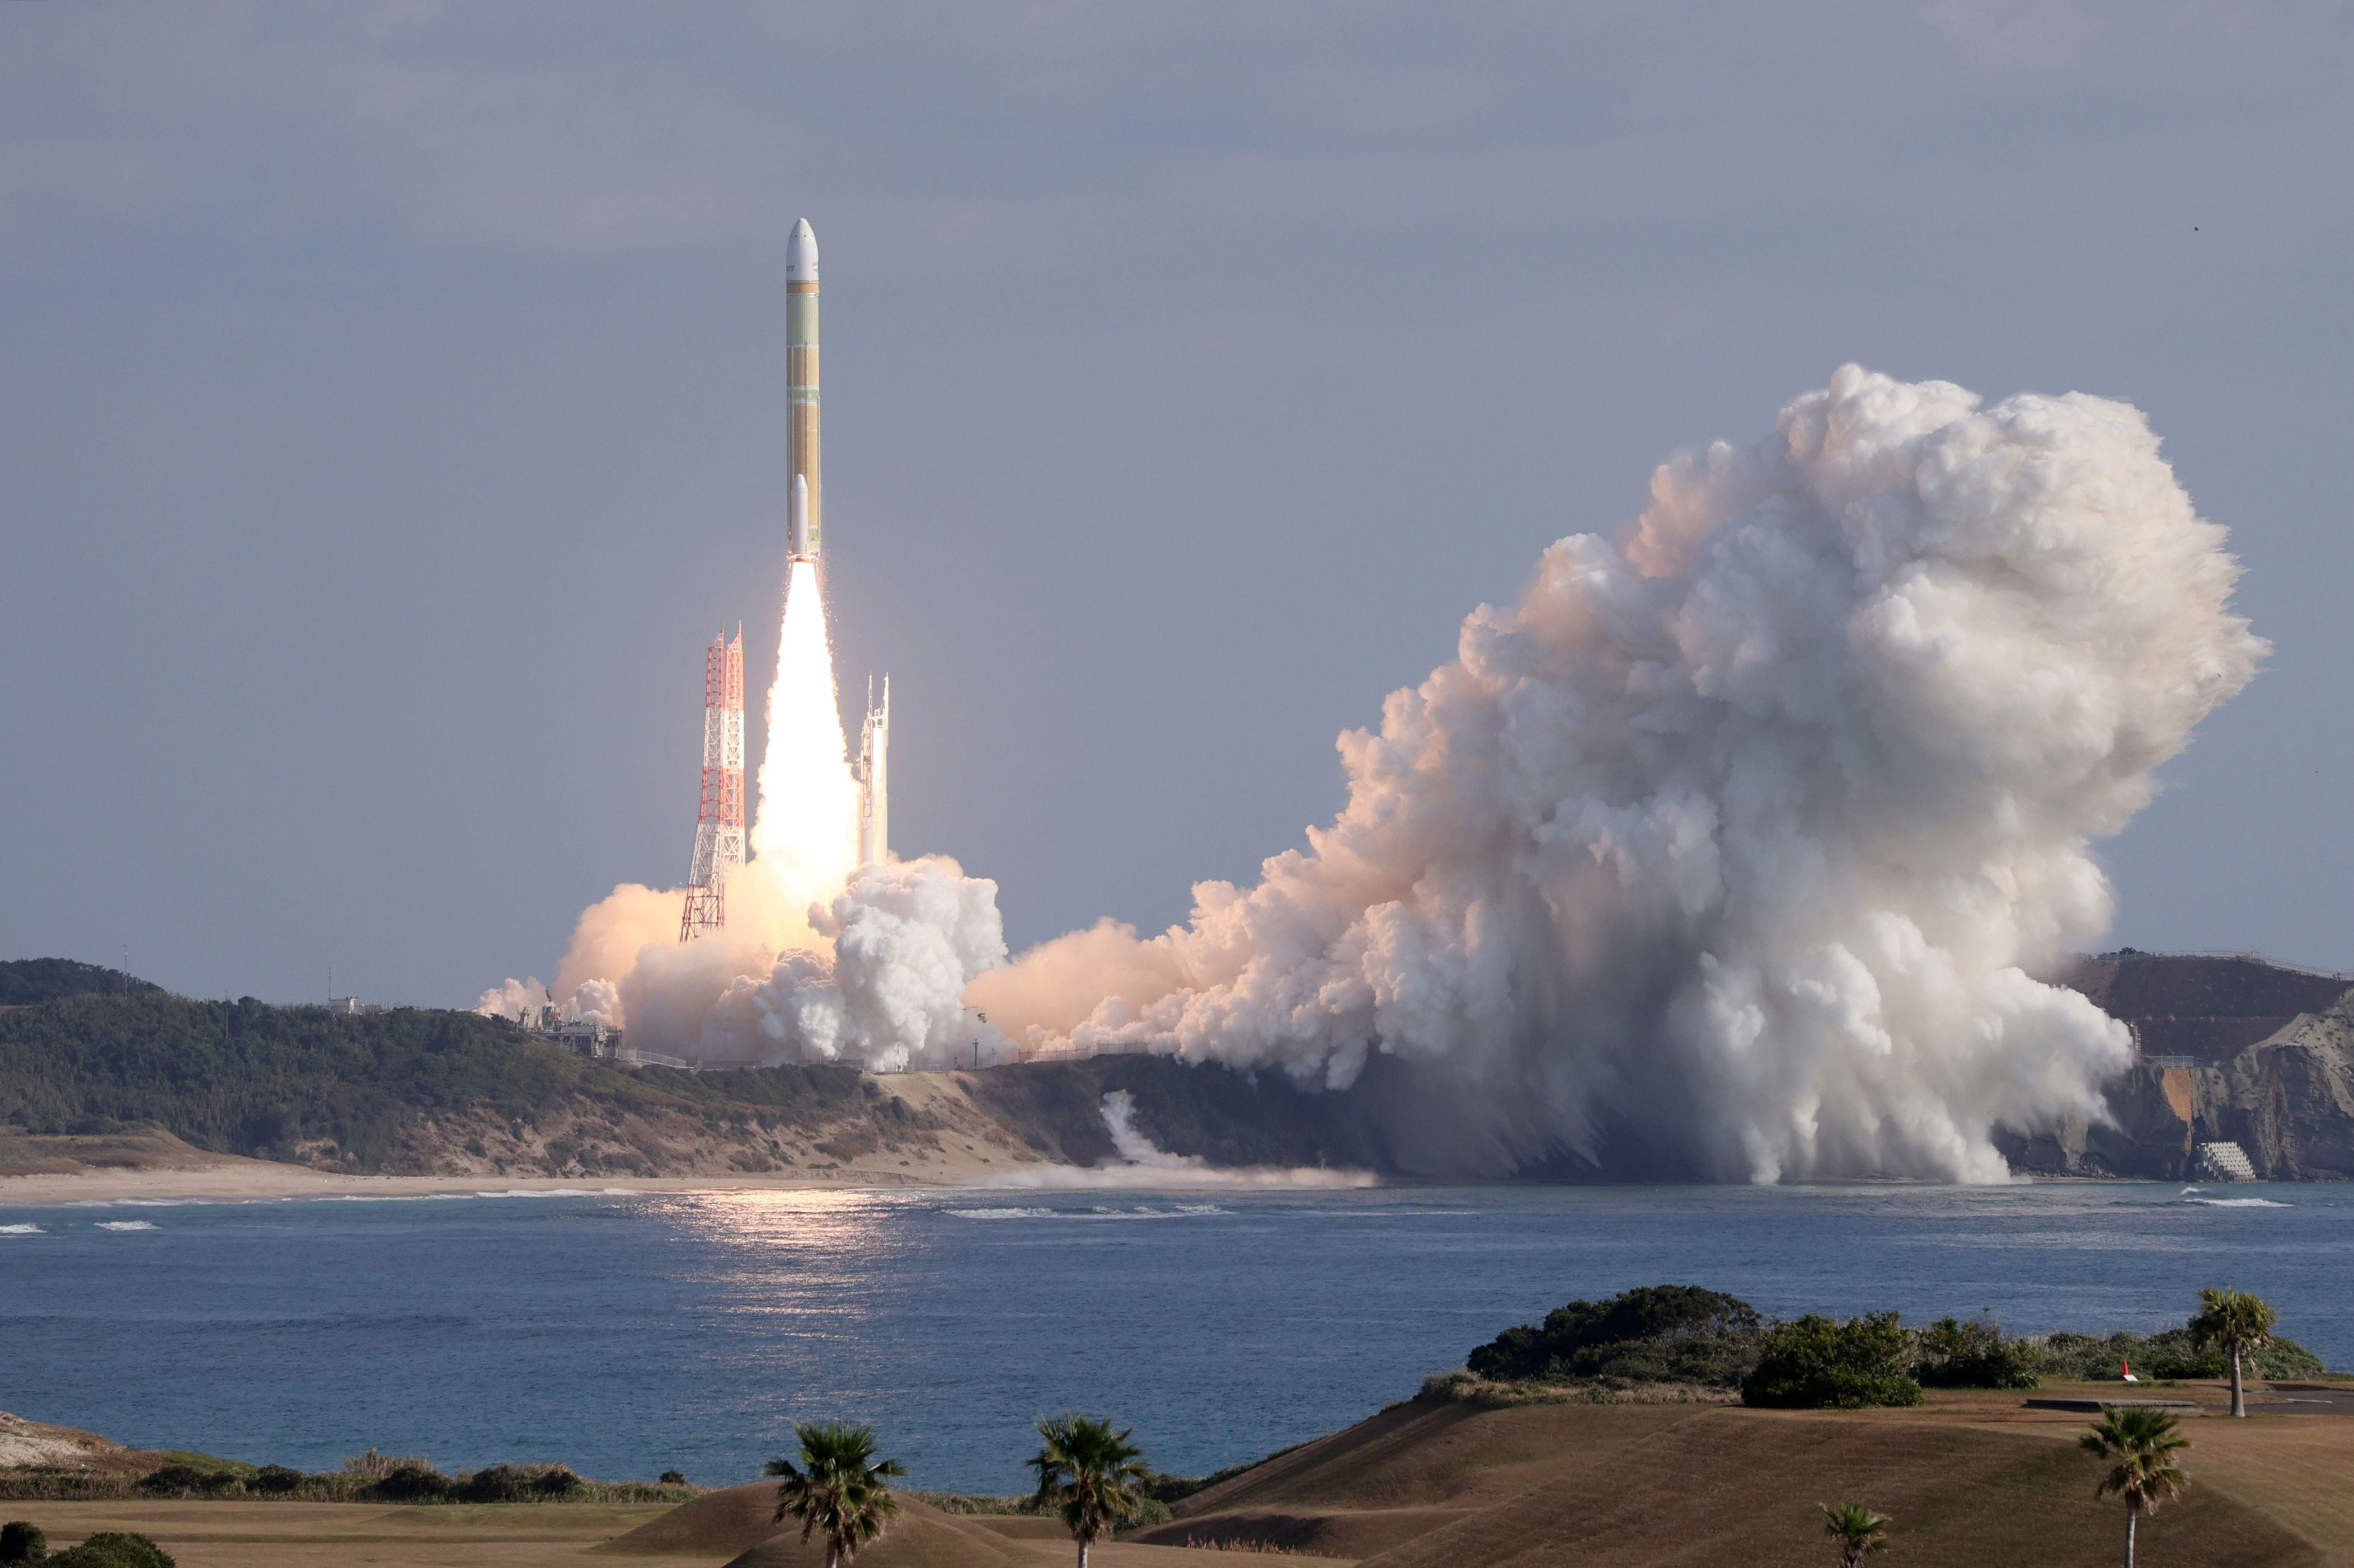 japan’s next-generation rocket reaches orbit a year after failed debut flight